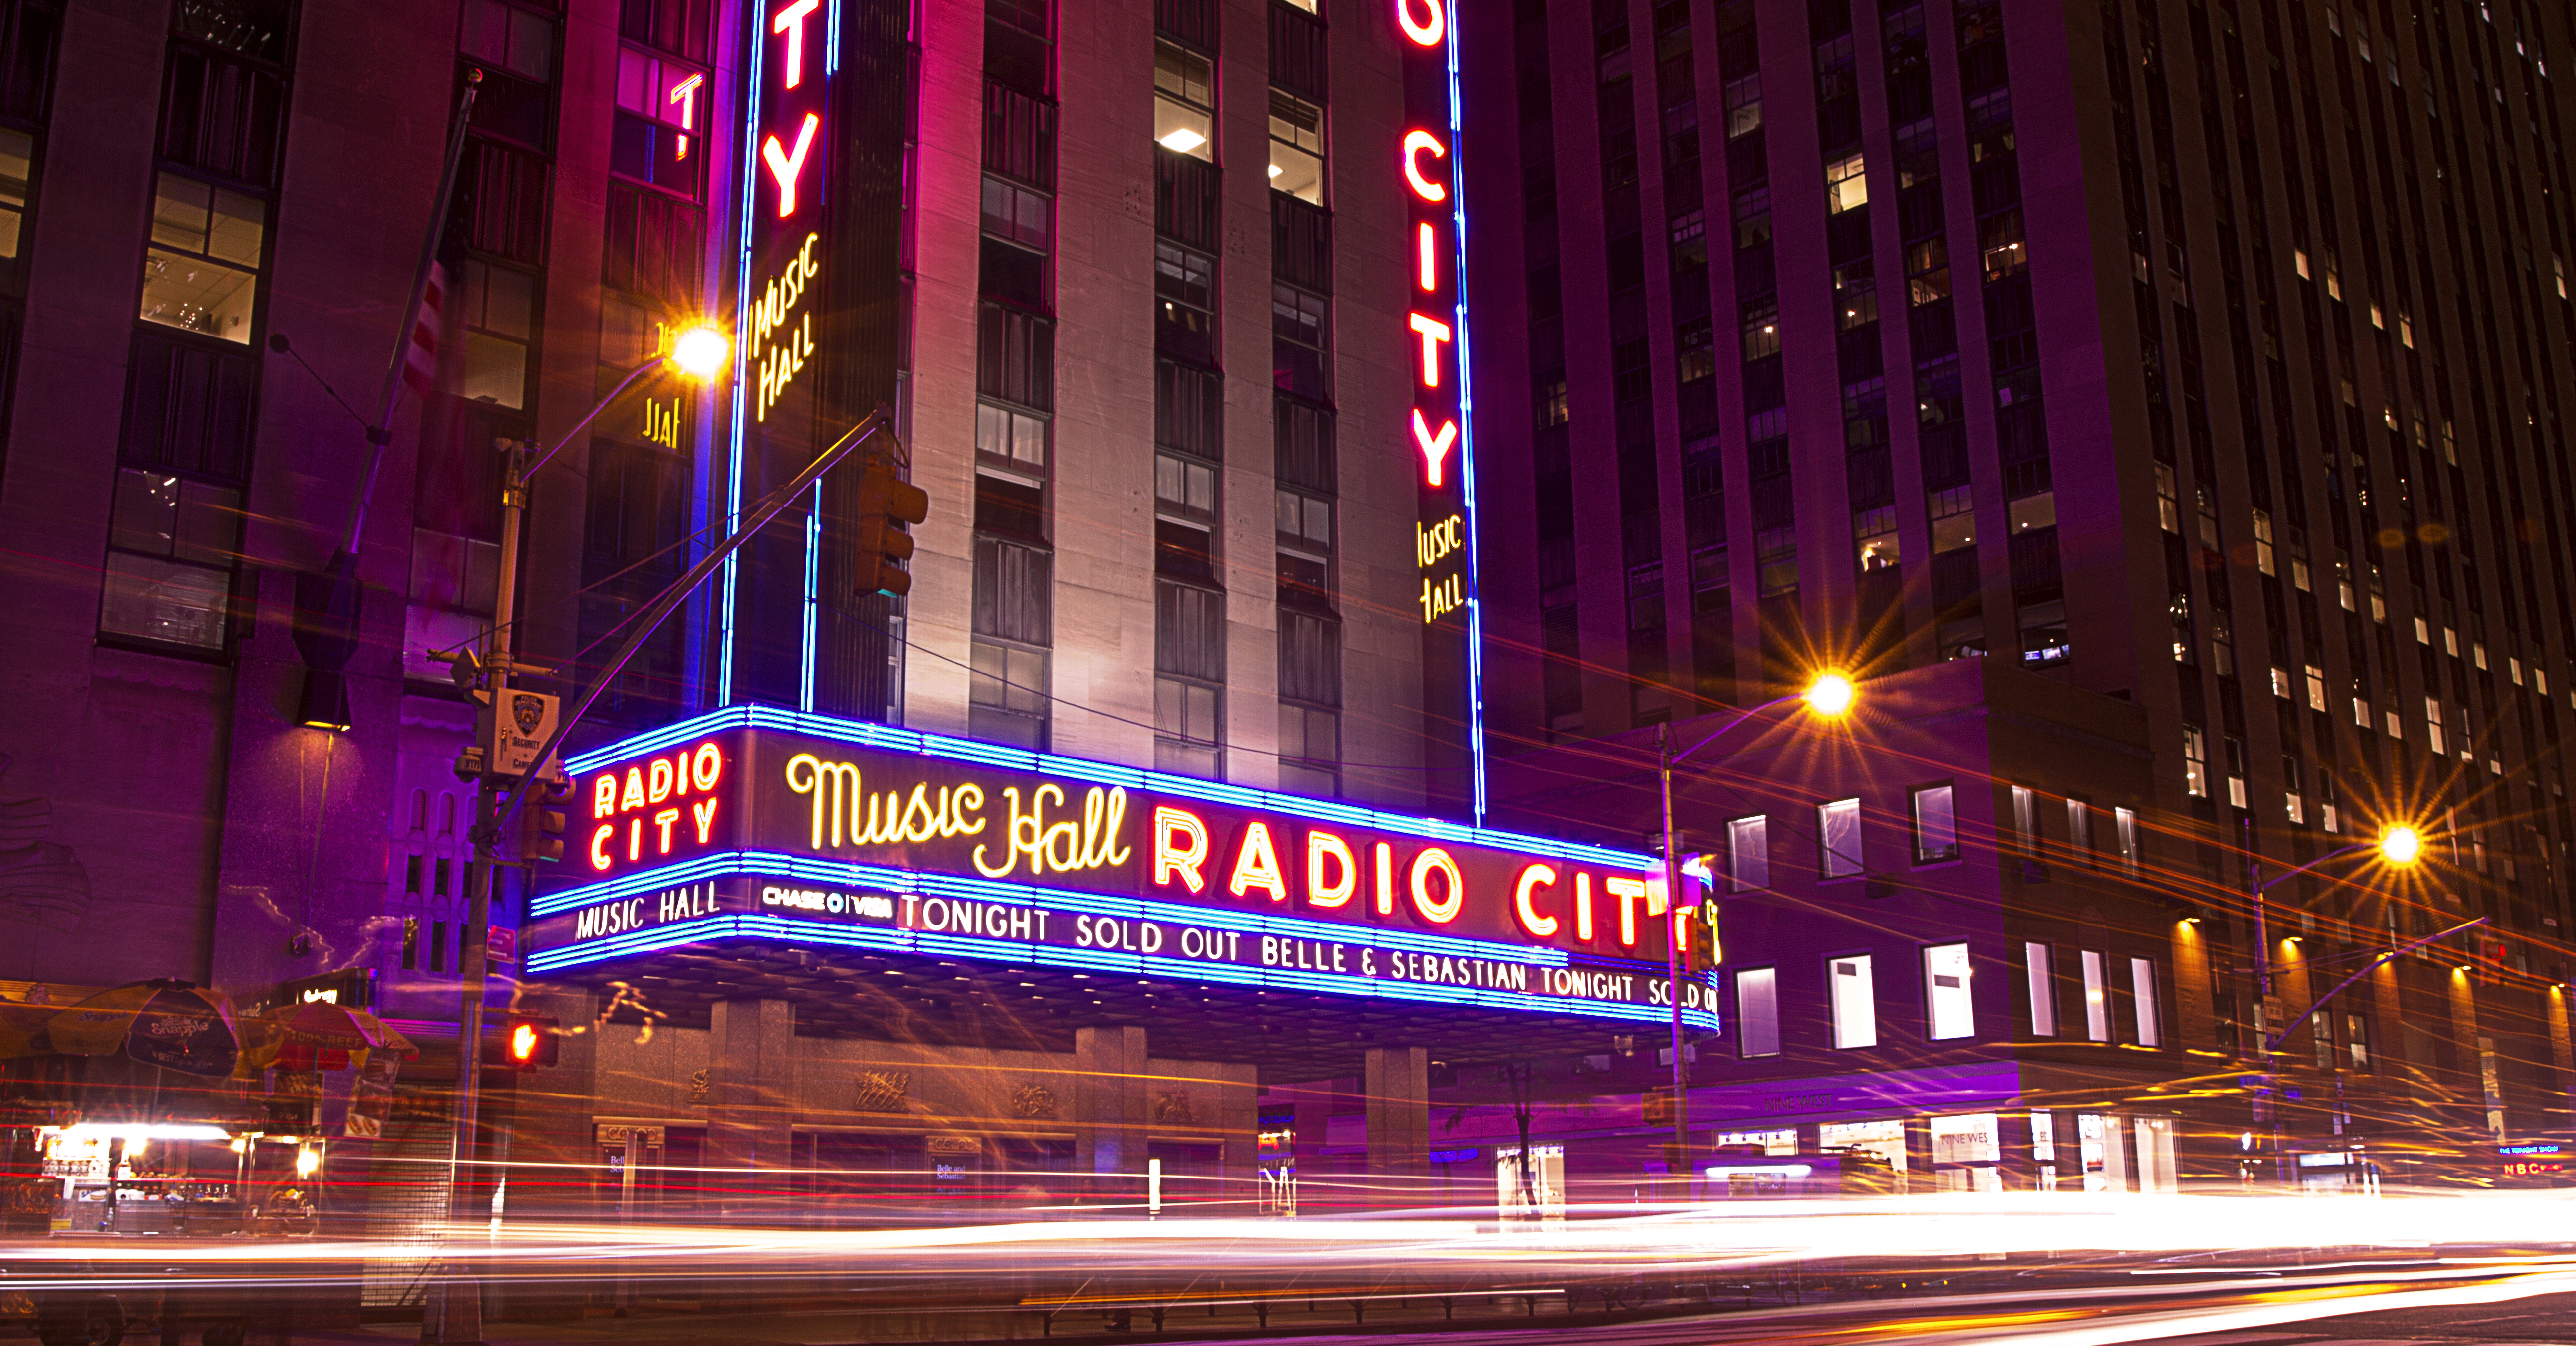 Radio City Music Hall Performances This Month - December 2017